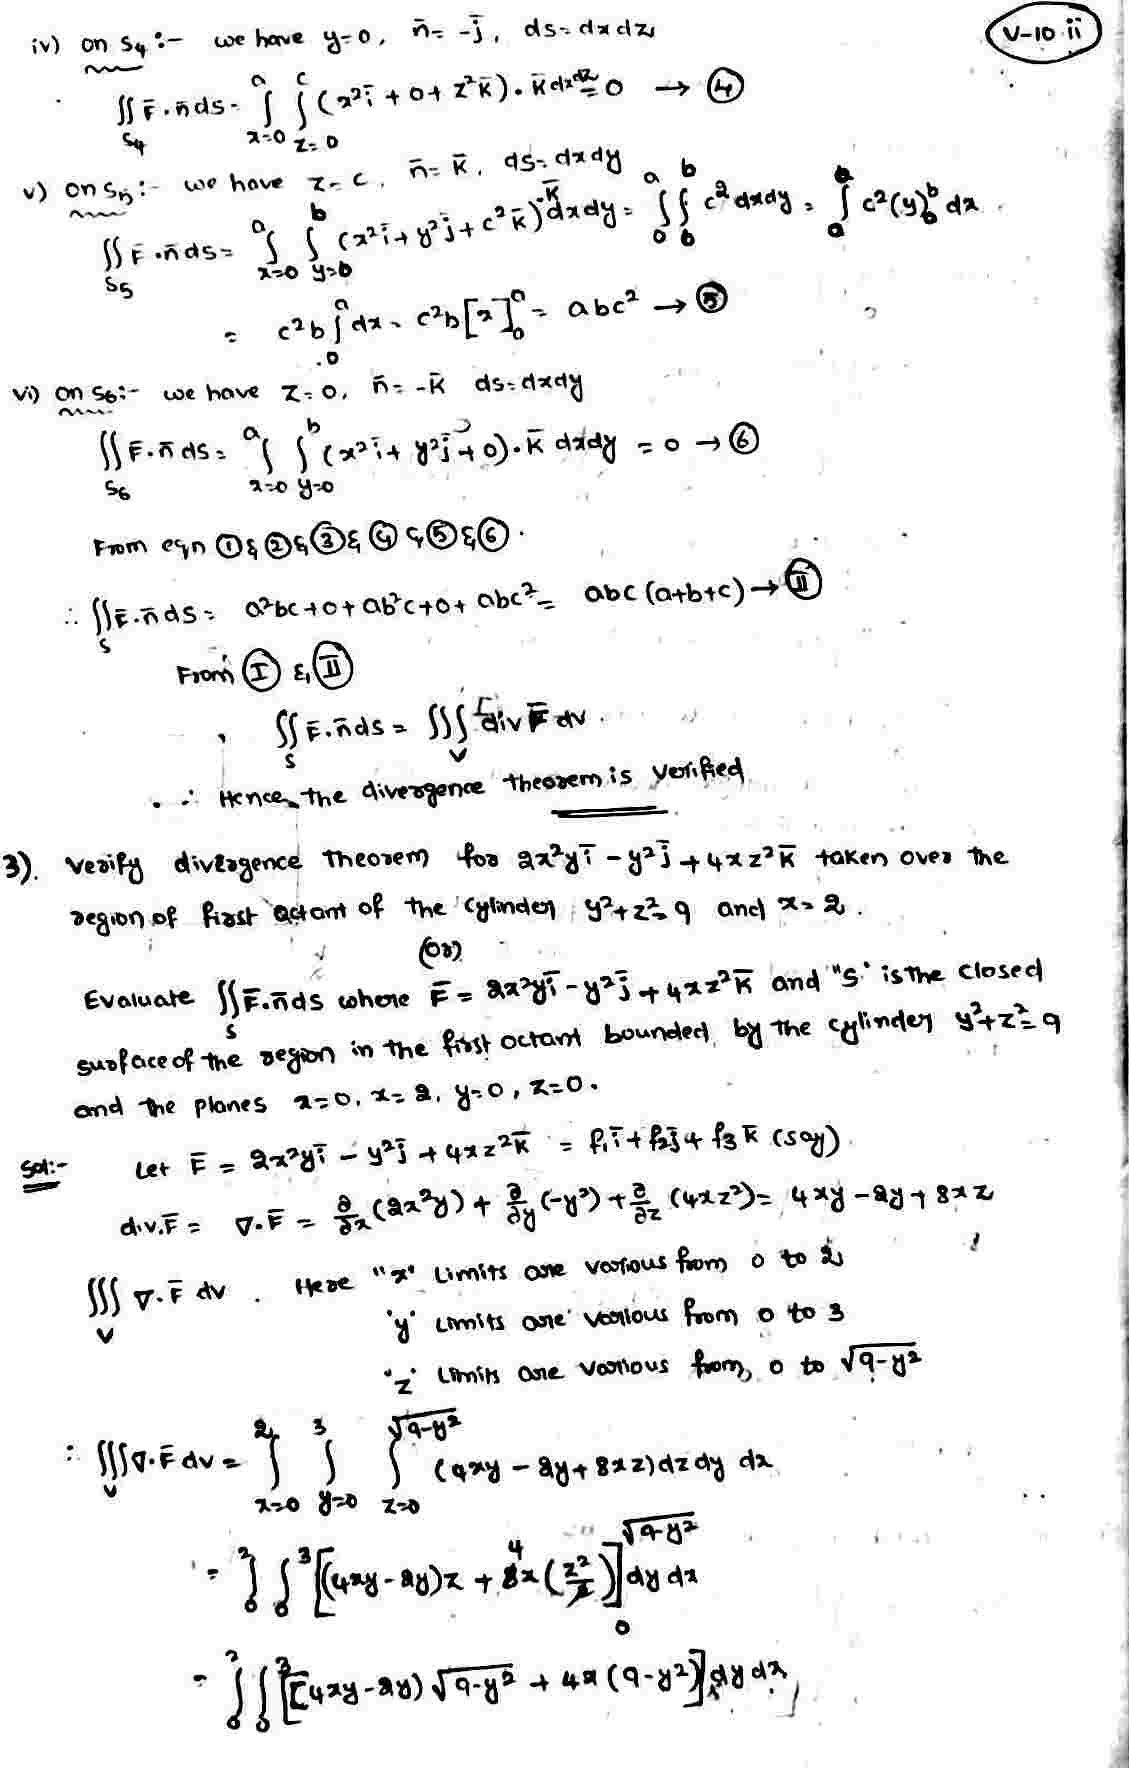 Gauss Divergence Theorem